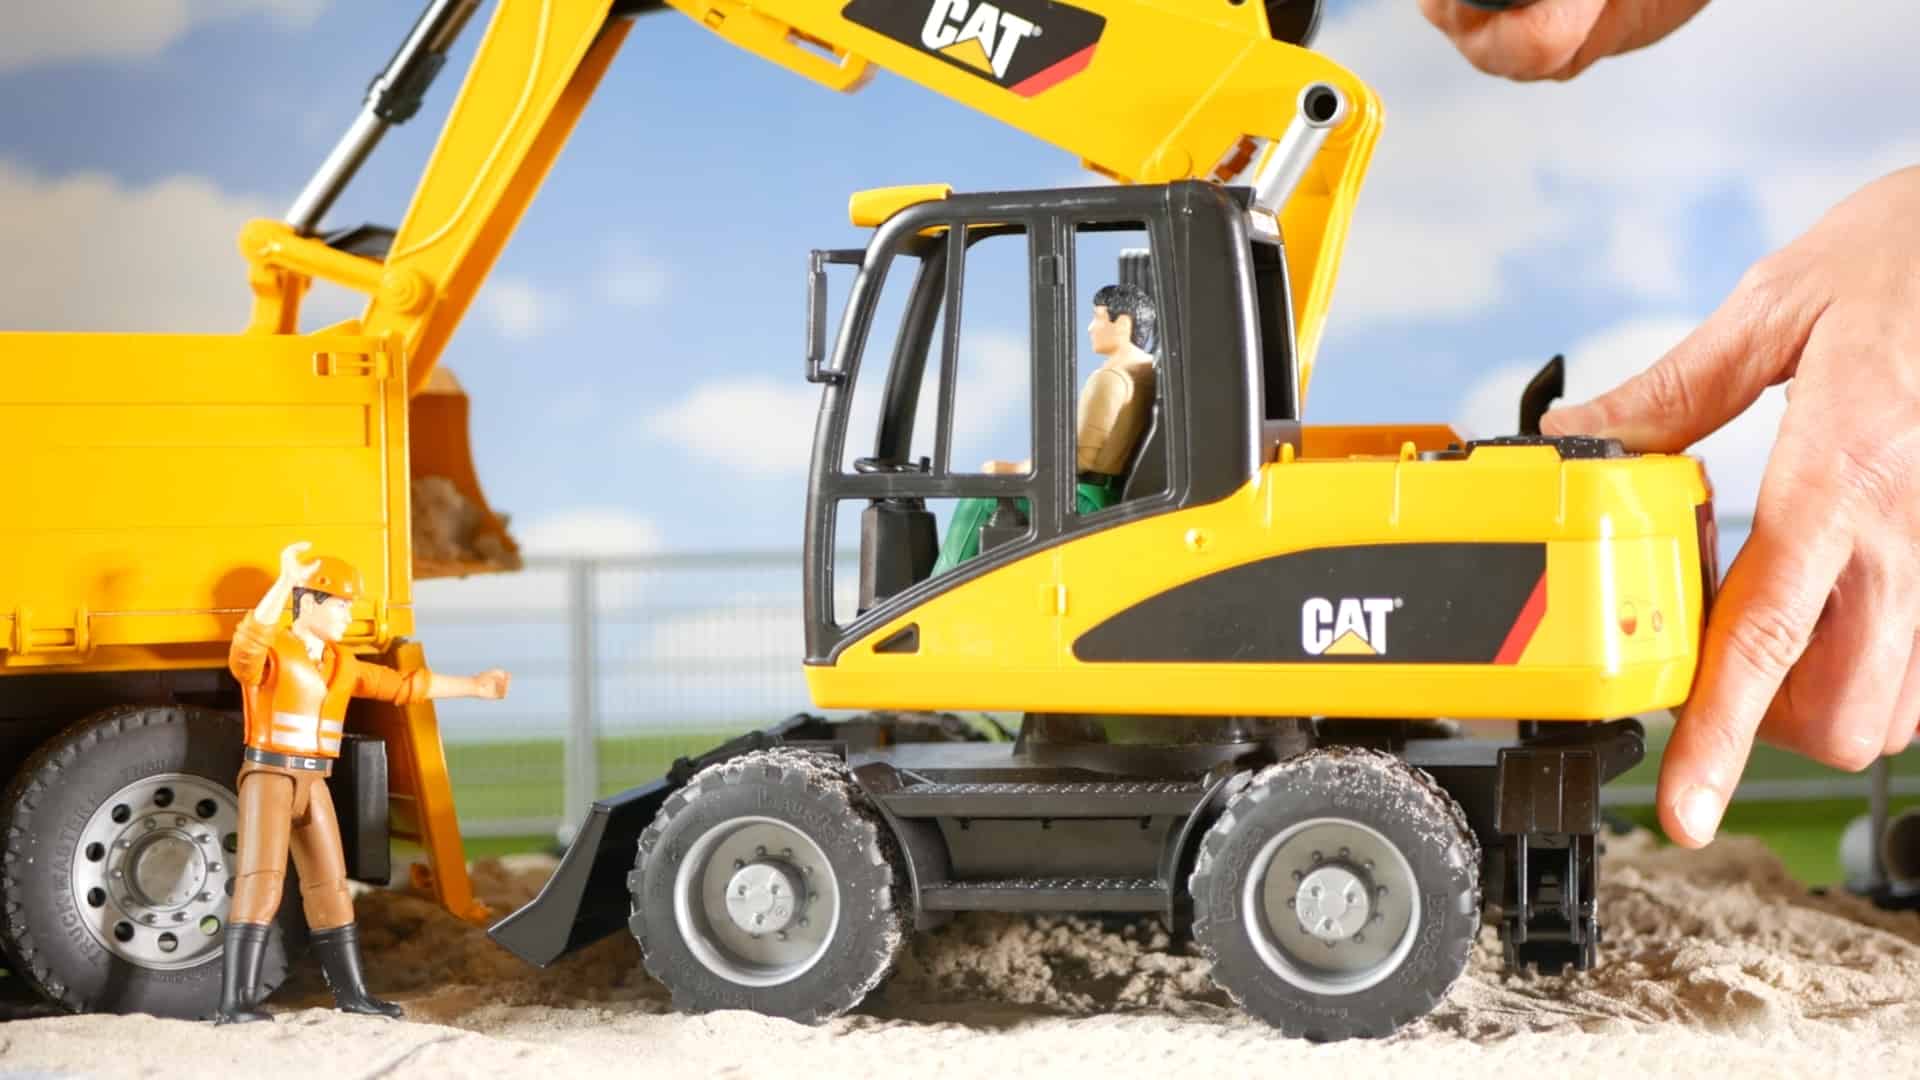 Best Excavator: Bruder 02446 Cat Small Wheel Excavator